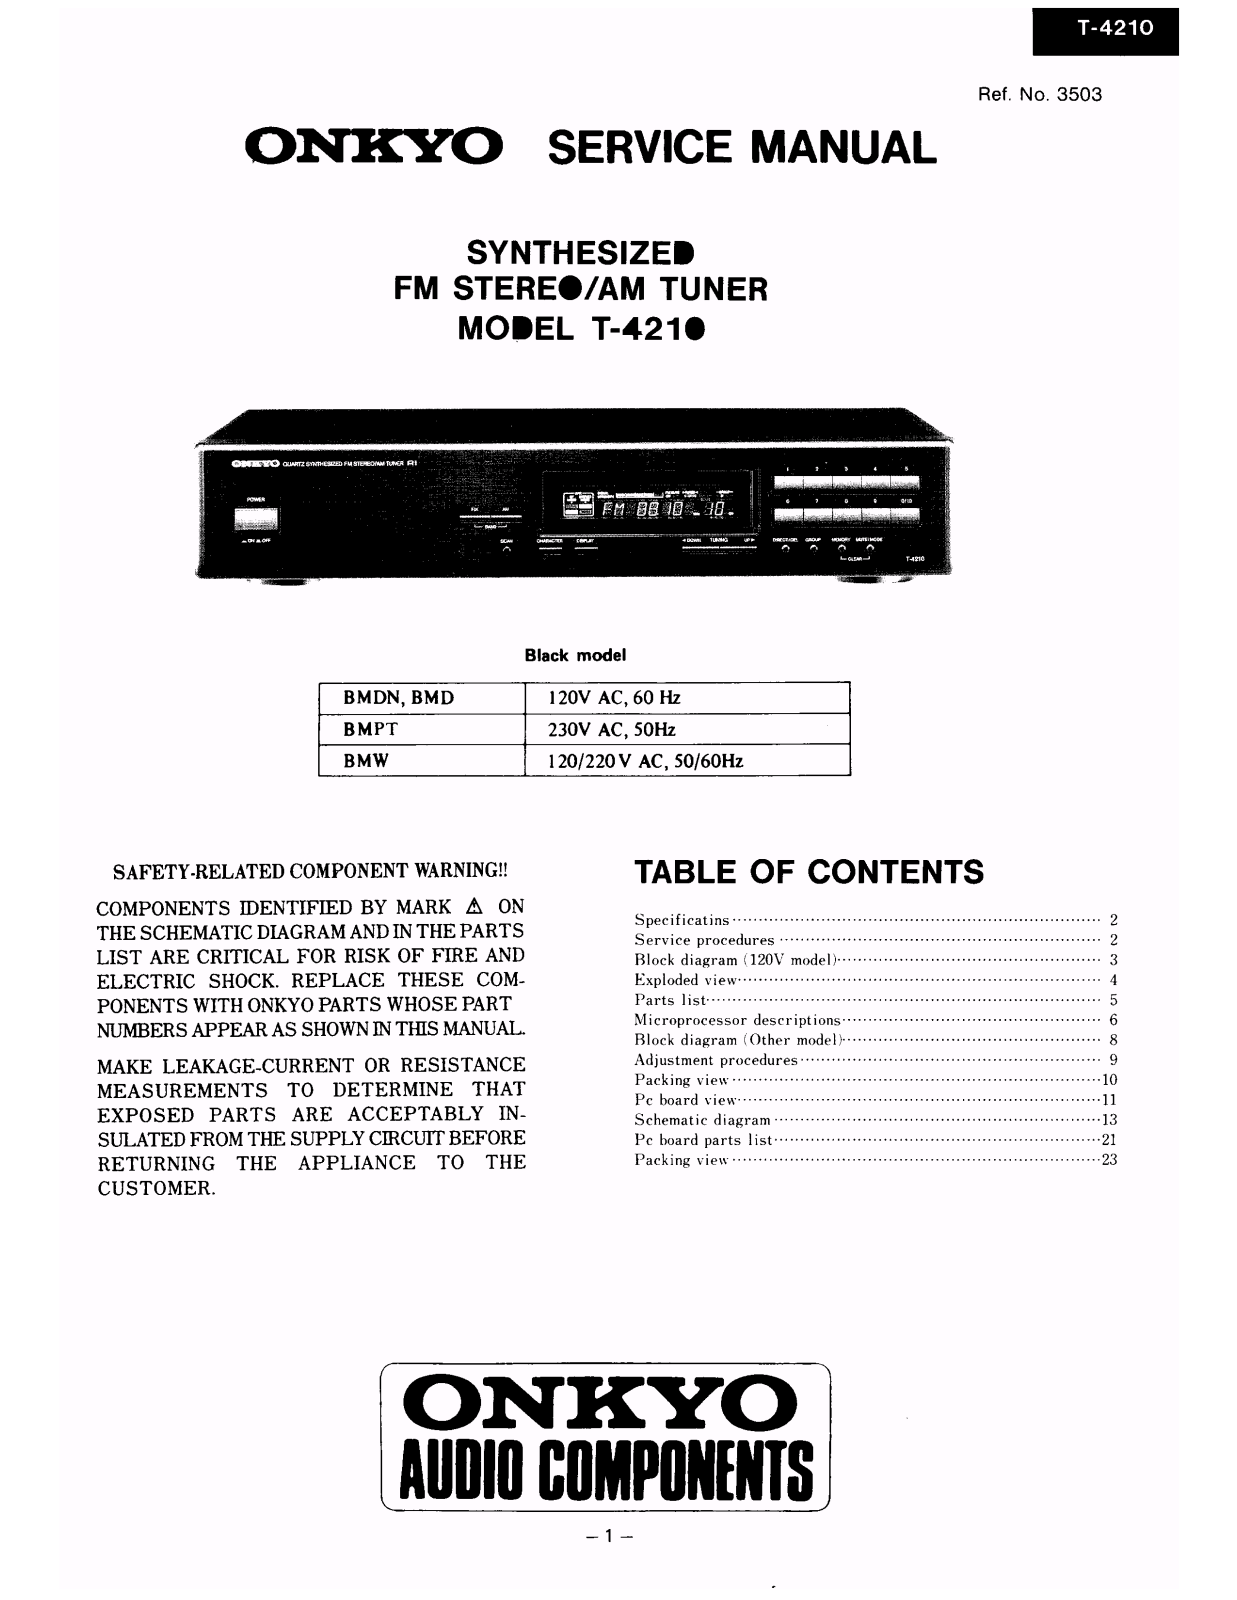 Onkyo T-4210 Service manual